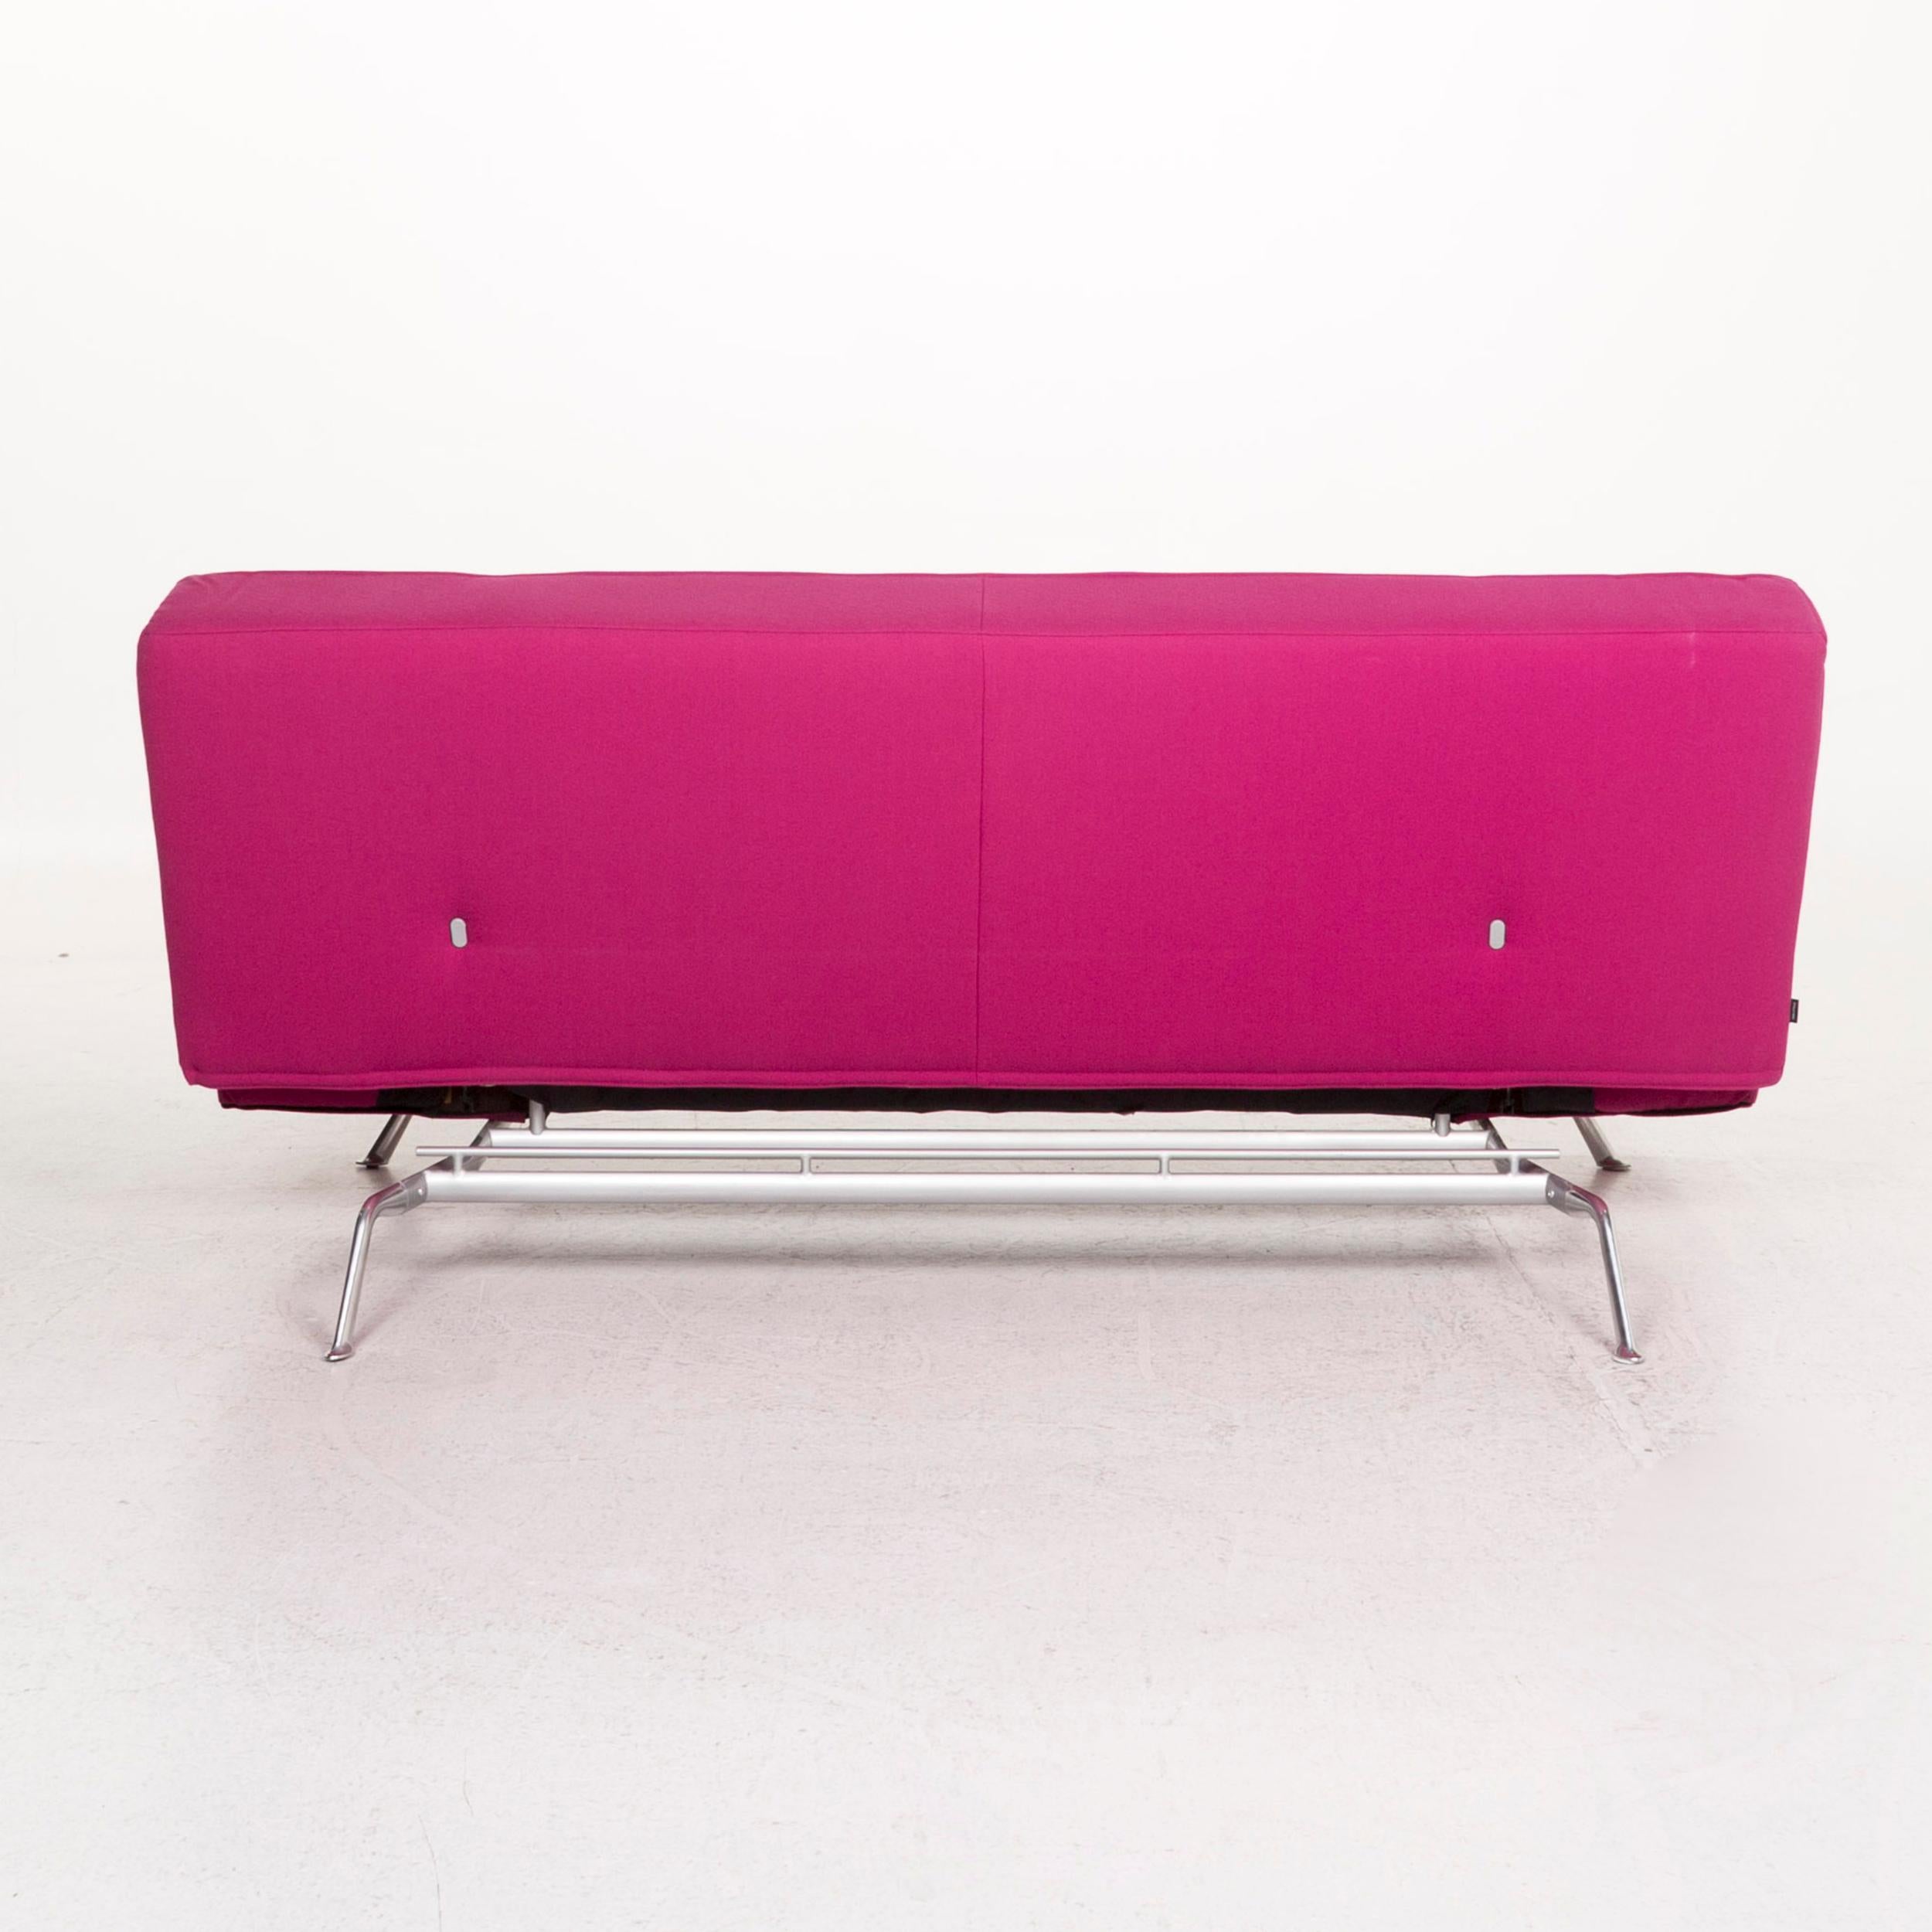 Ligne Roset Smala Fabric Sofa Pink Three-Seat Sofa Bed Function Sleep 1